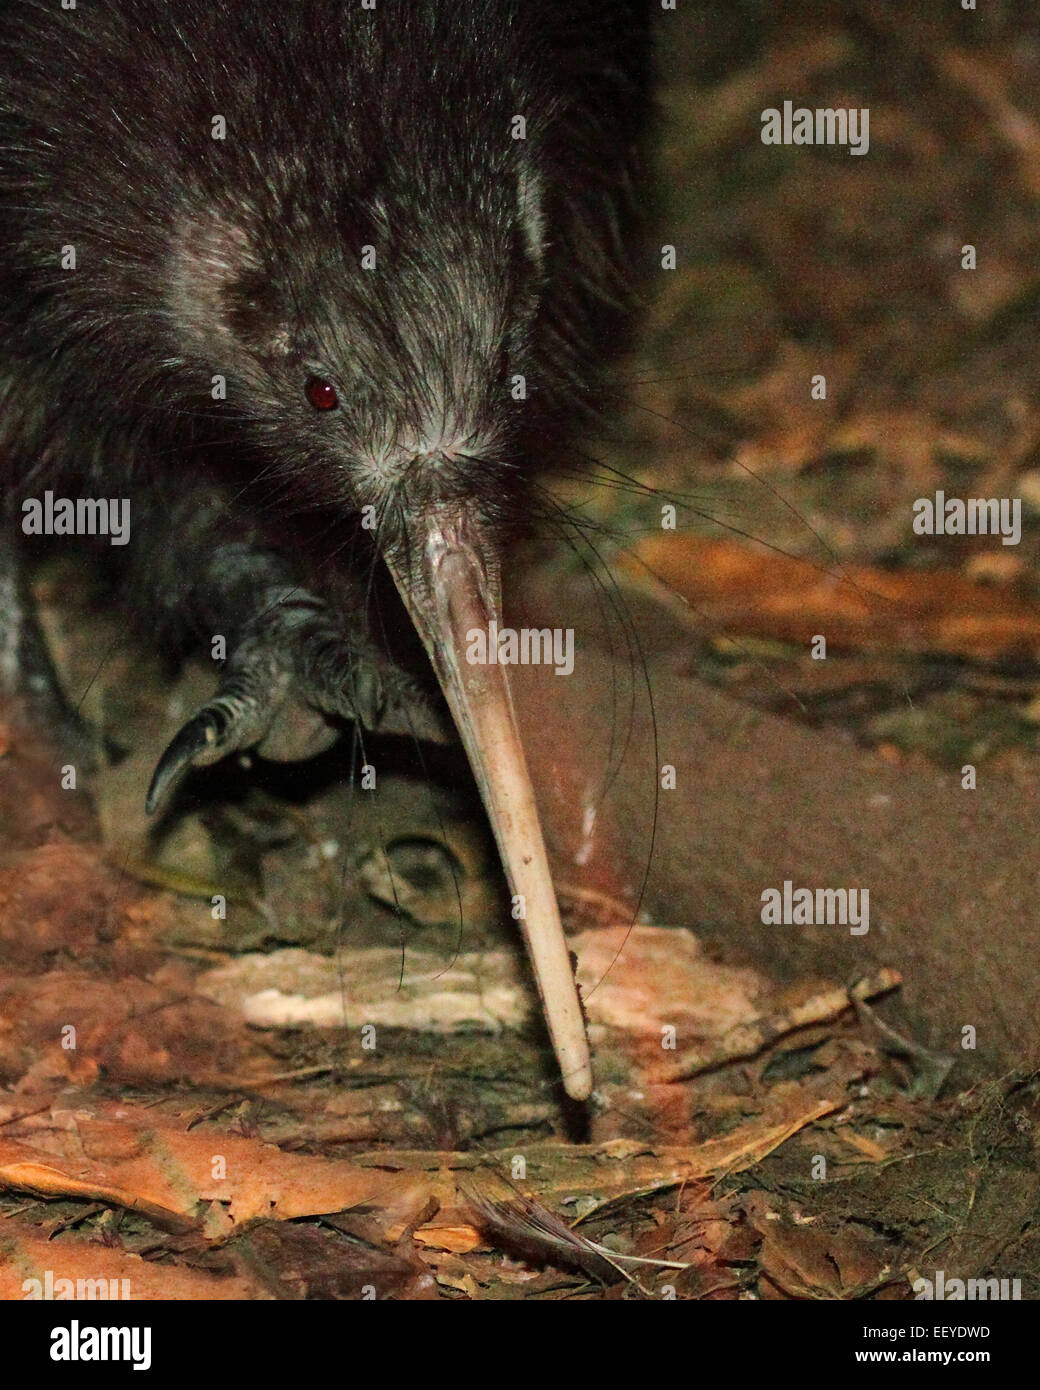 A Kiwi highlighting its large beak while walking. Stock Photo